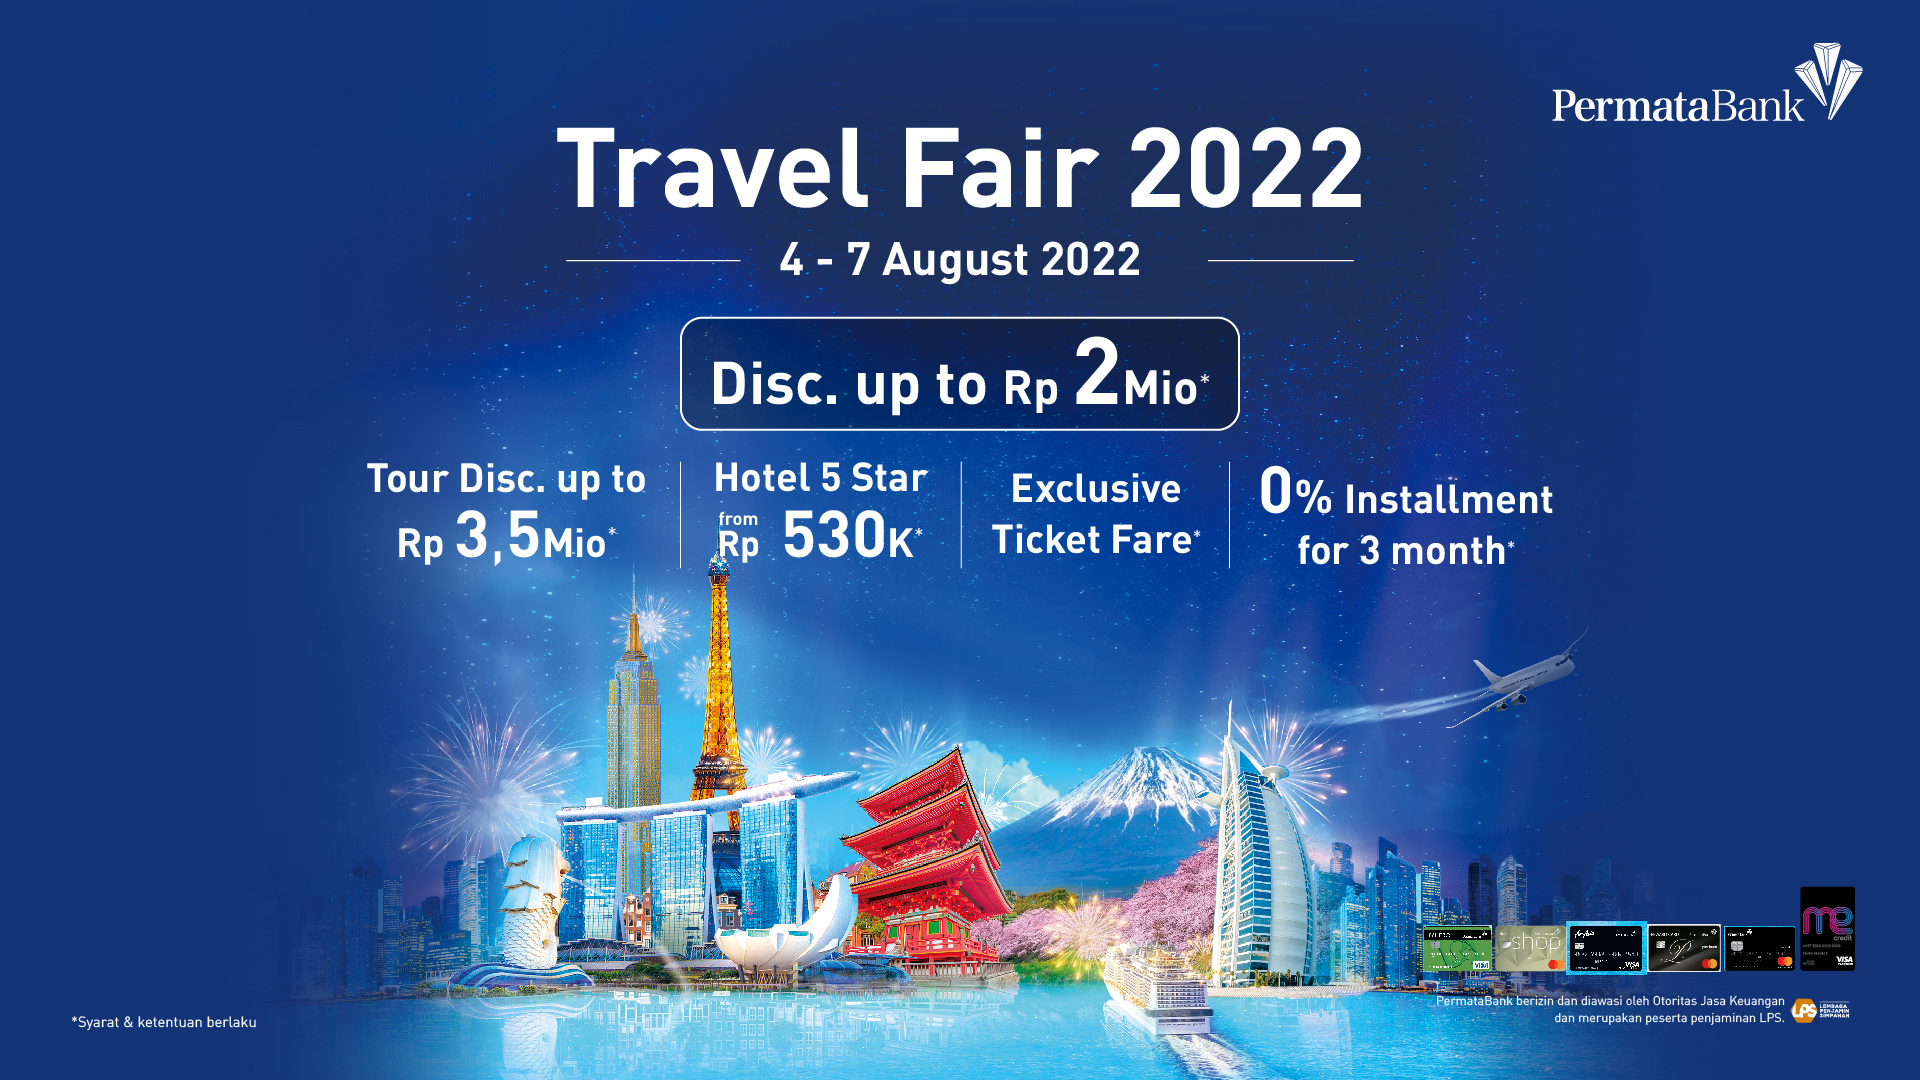 PermataBank Travel Fair 2022 s/d 7 Agustus Points Geek